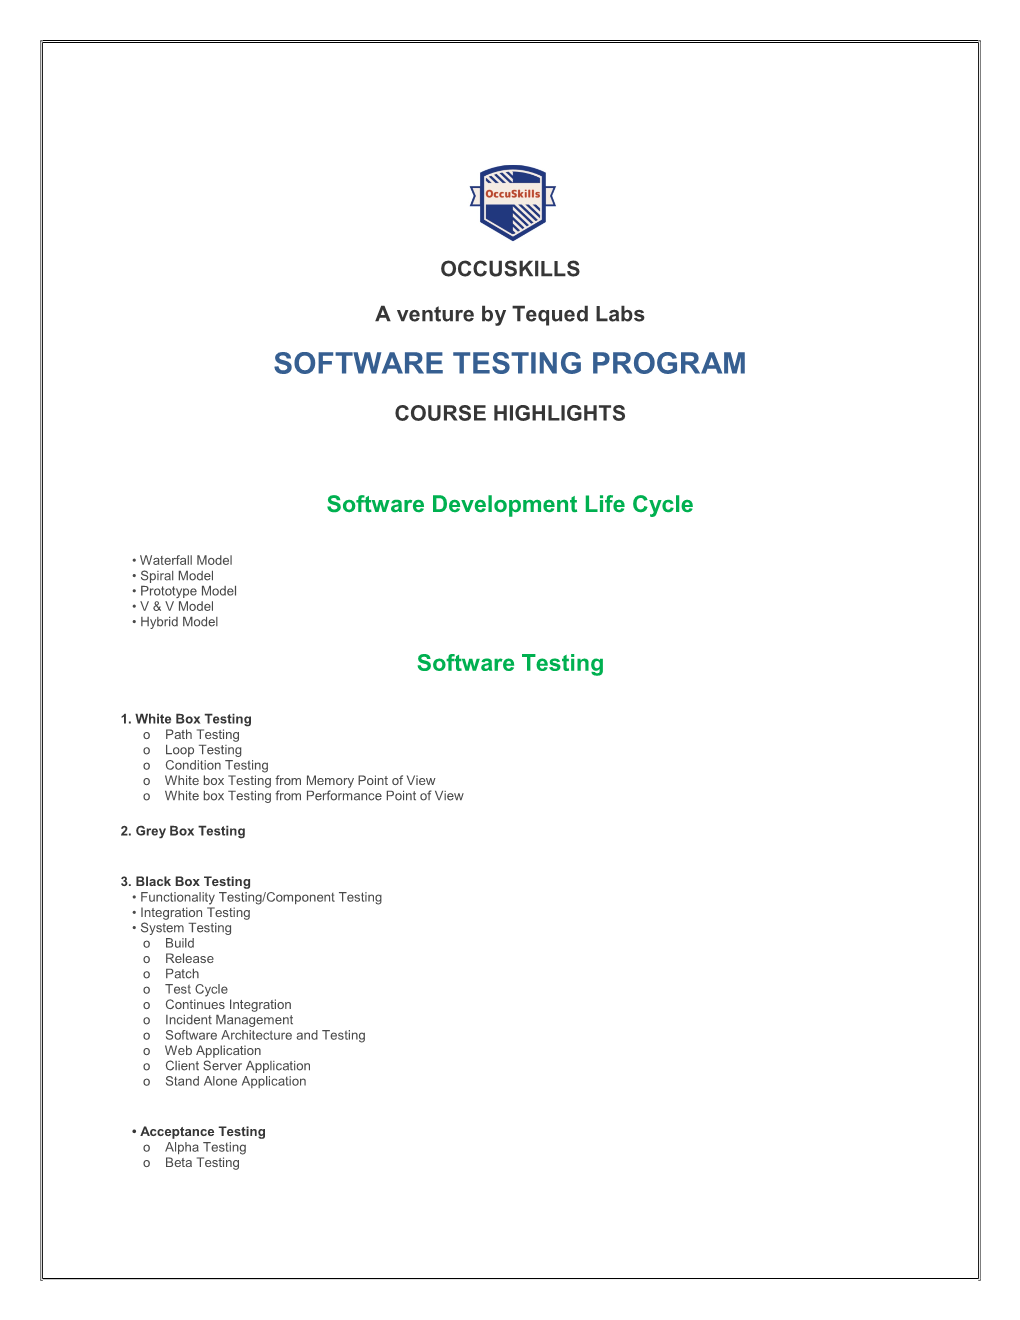 Software Testing Program